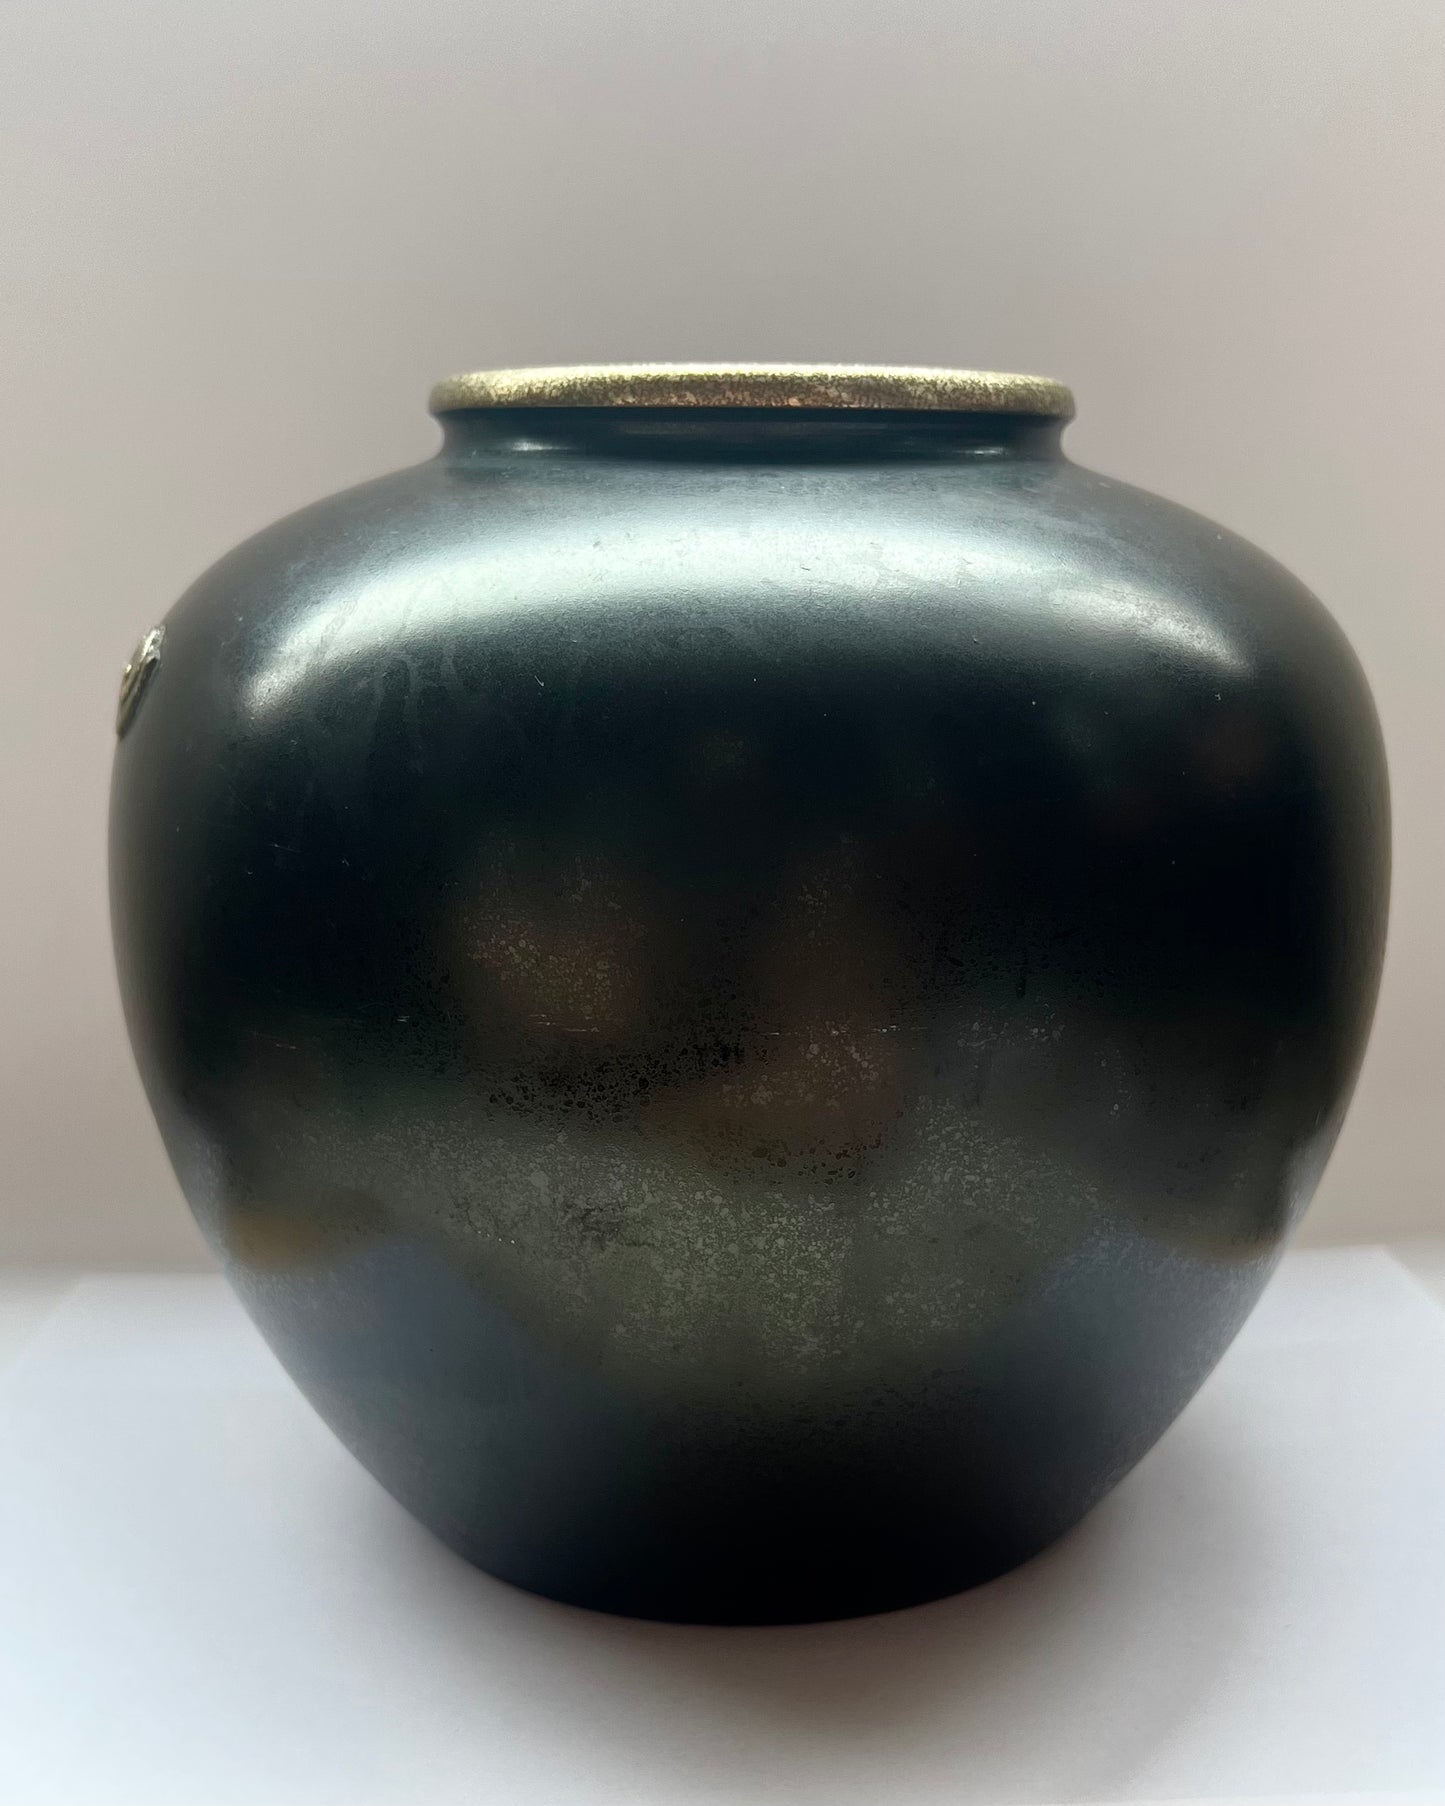 Late Meiji Period Japanese bronze vase with gilt seashell motifs circa 1900s